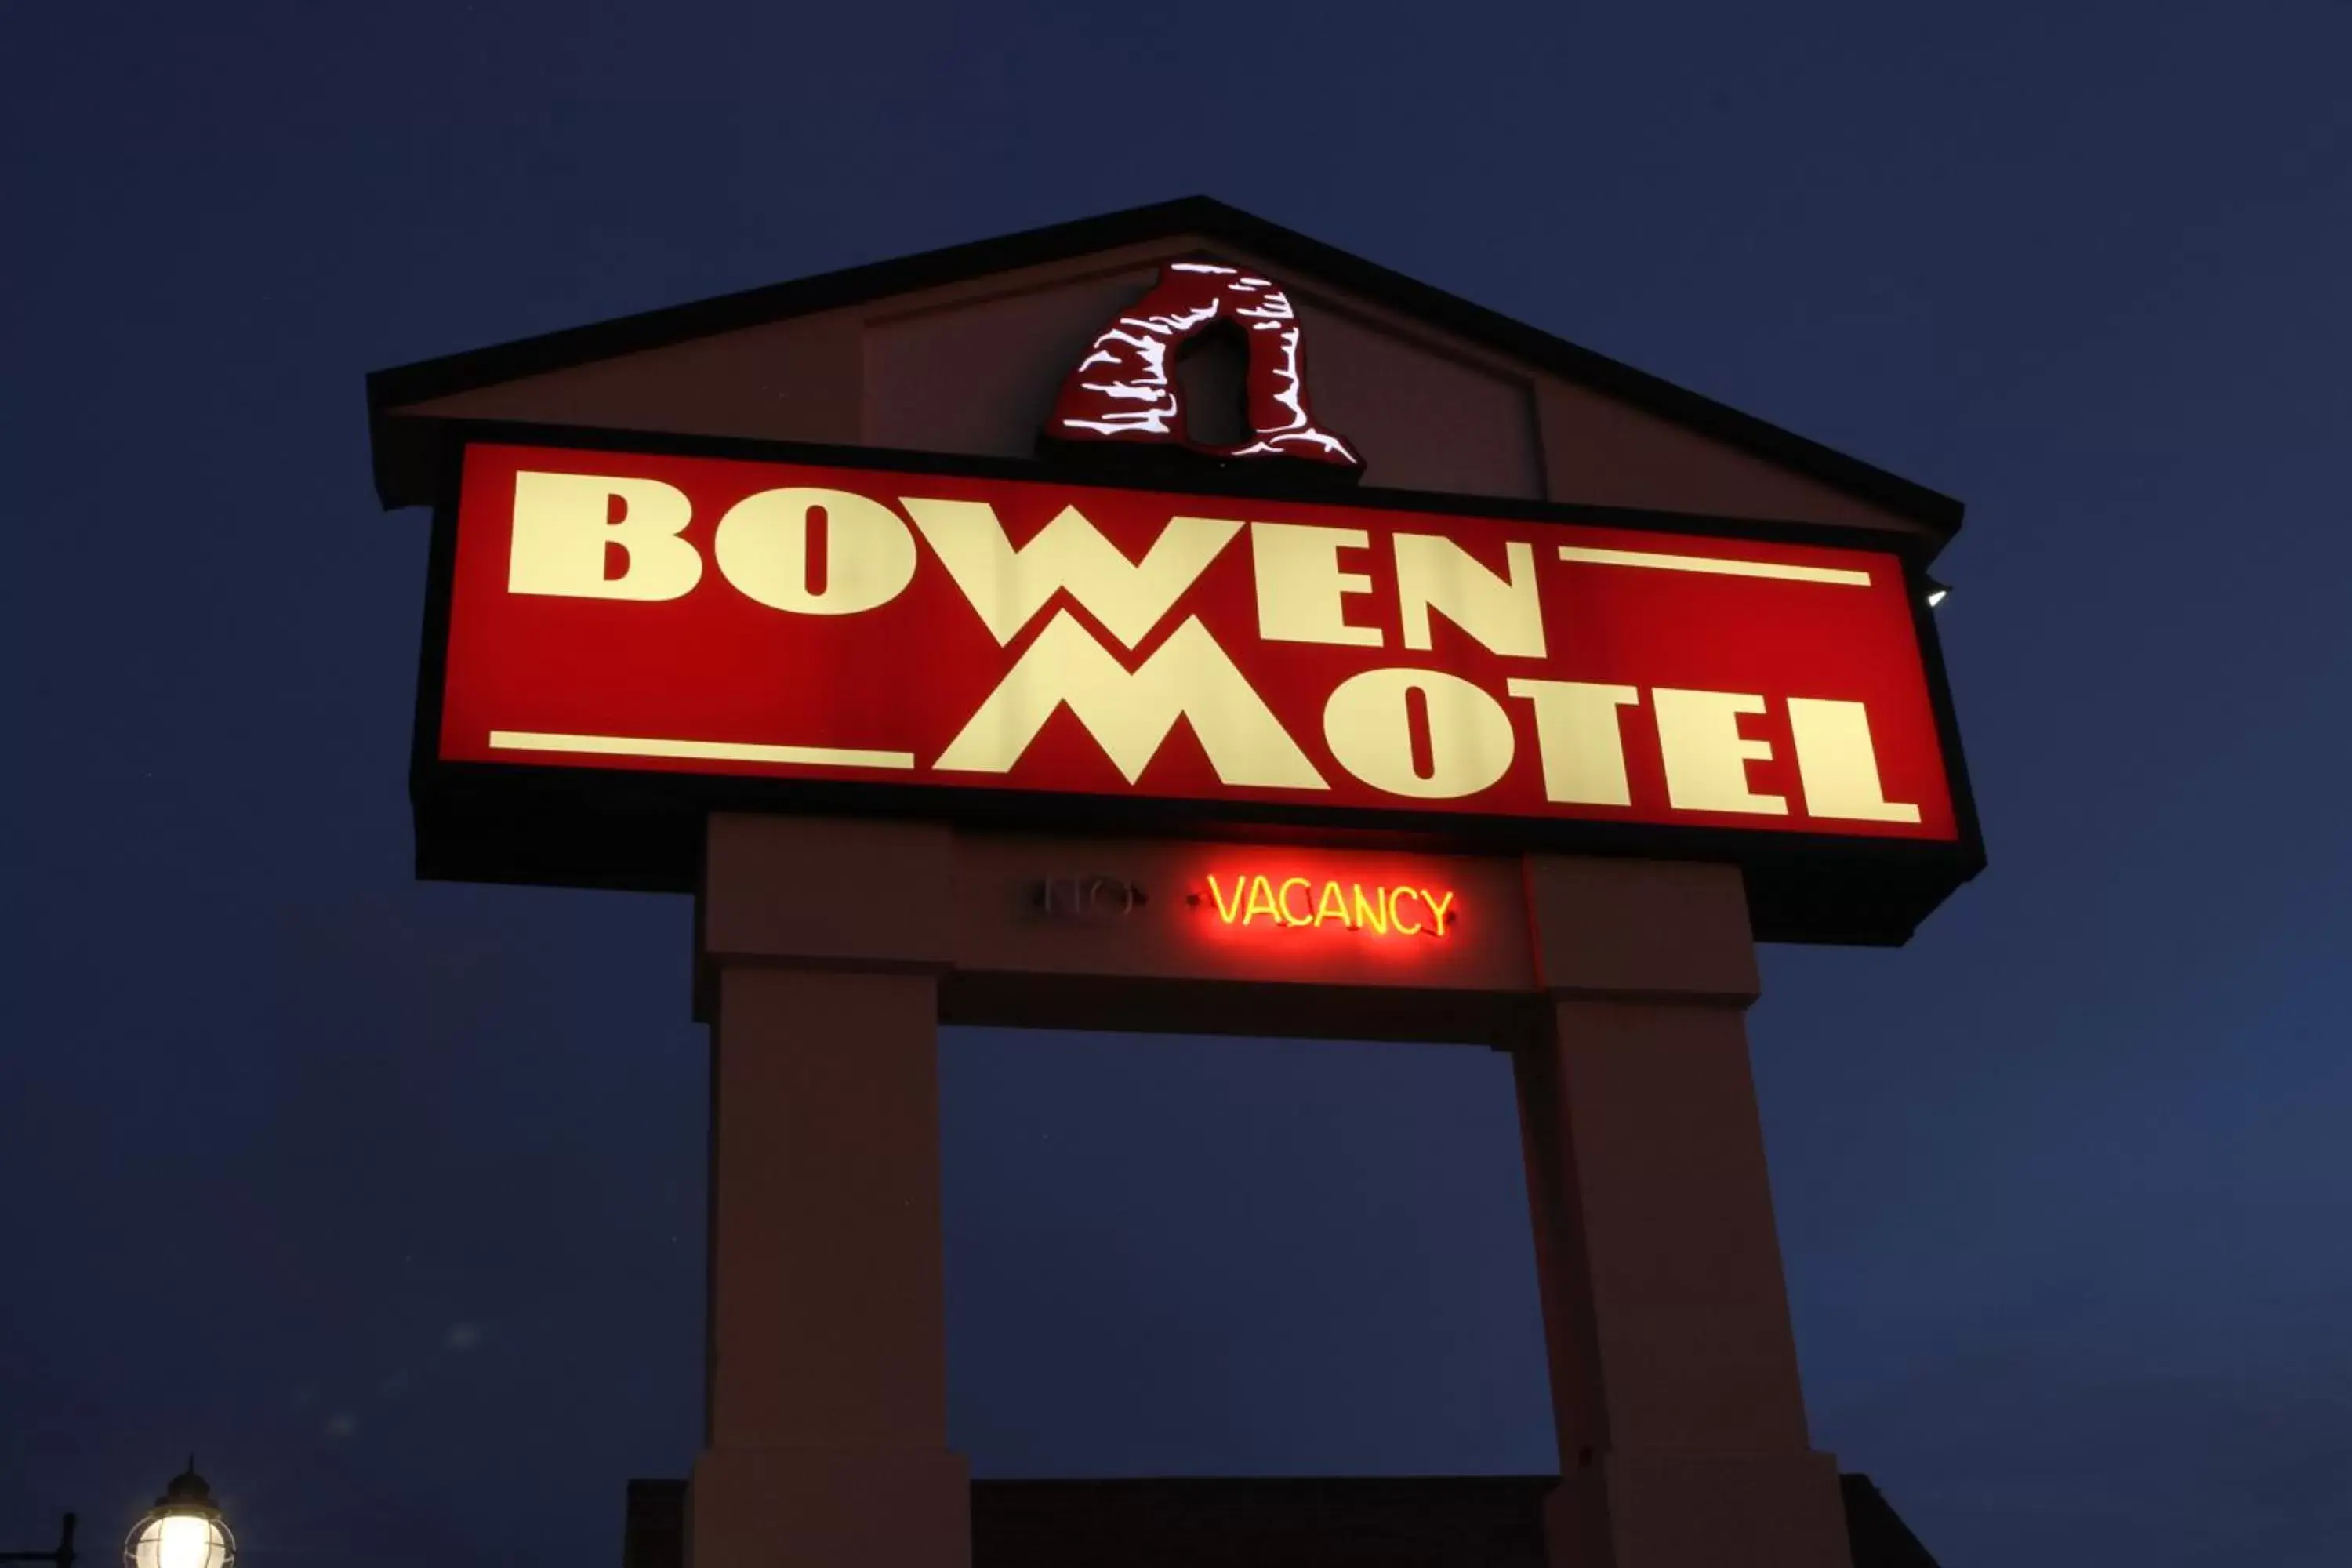 Property logo or sign in Bowen Motel